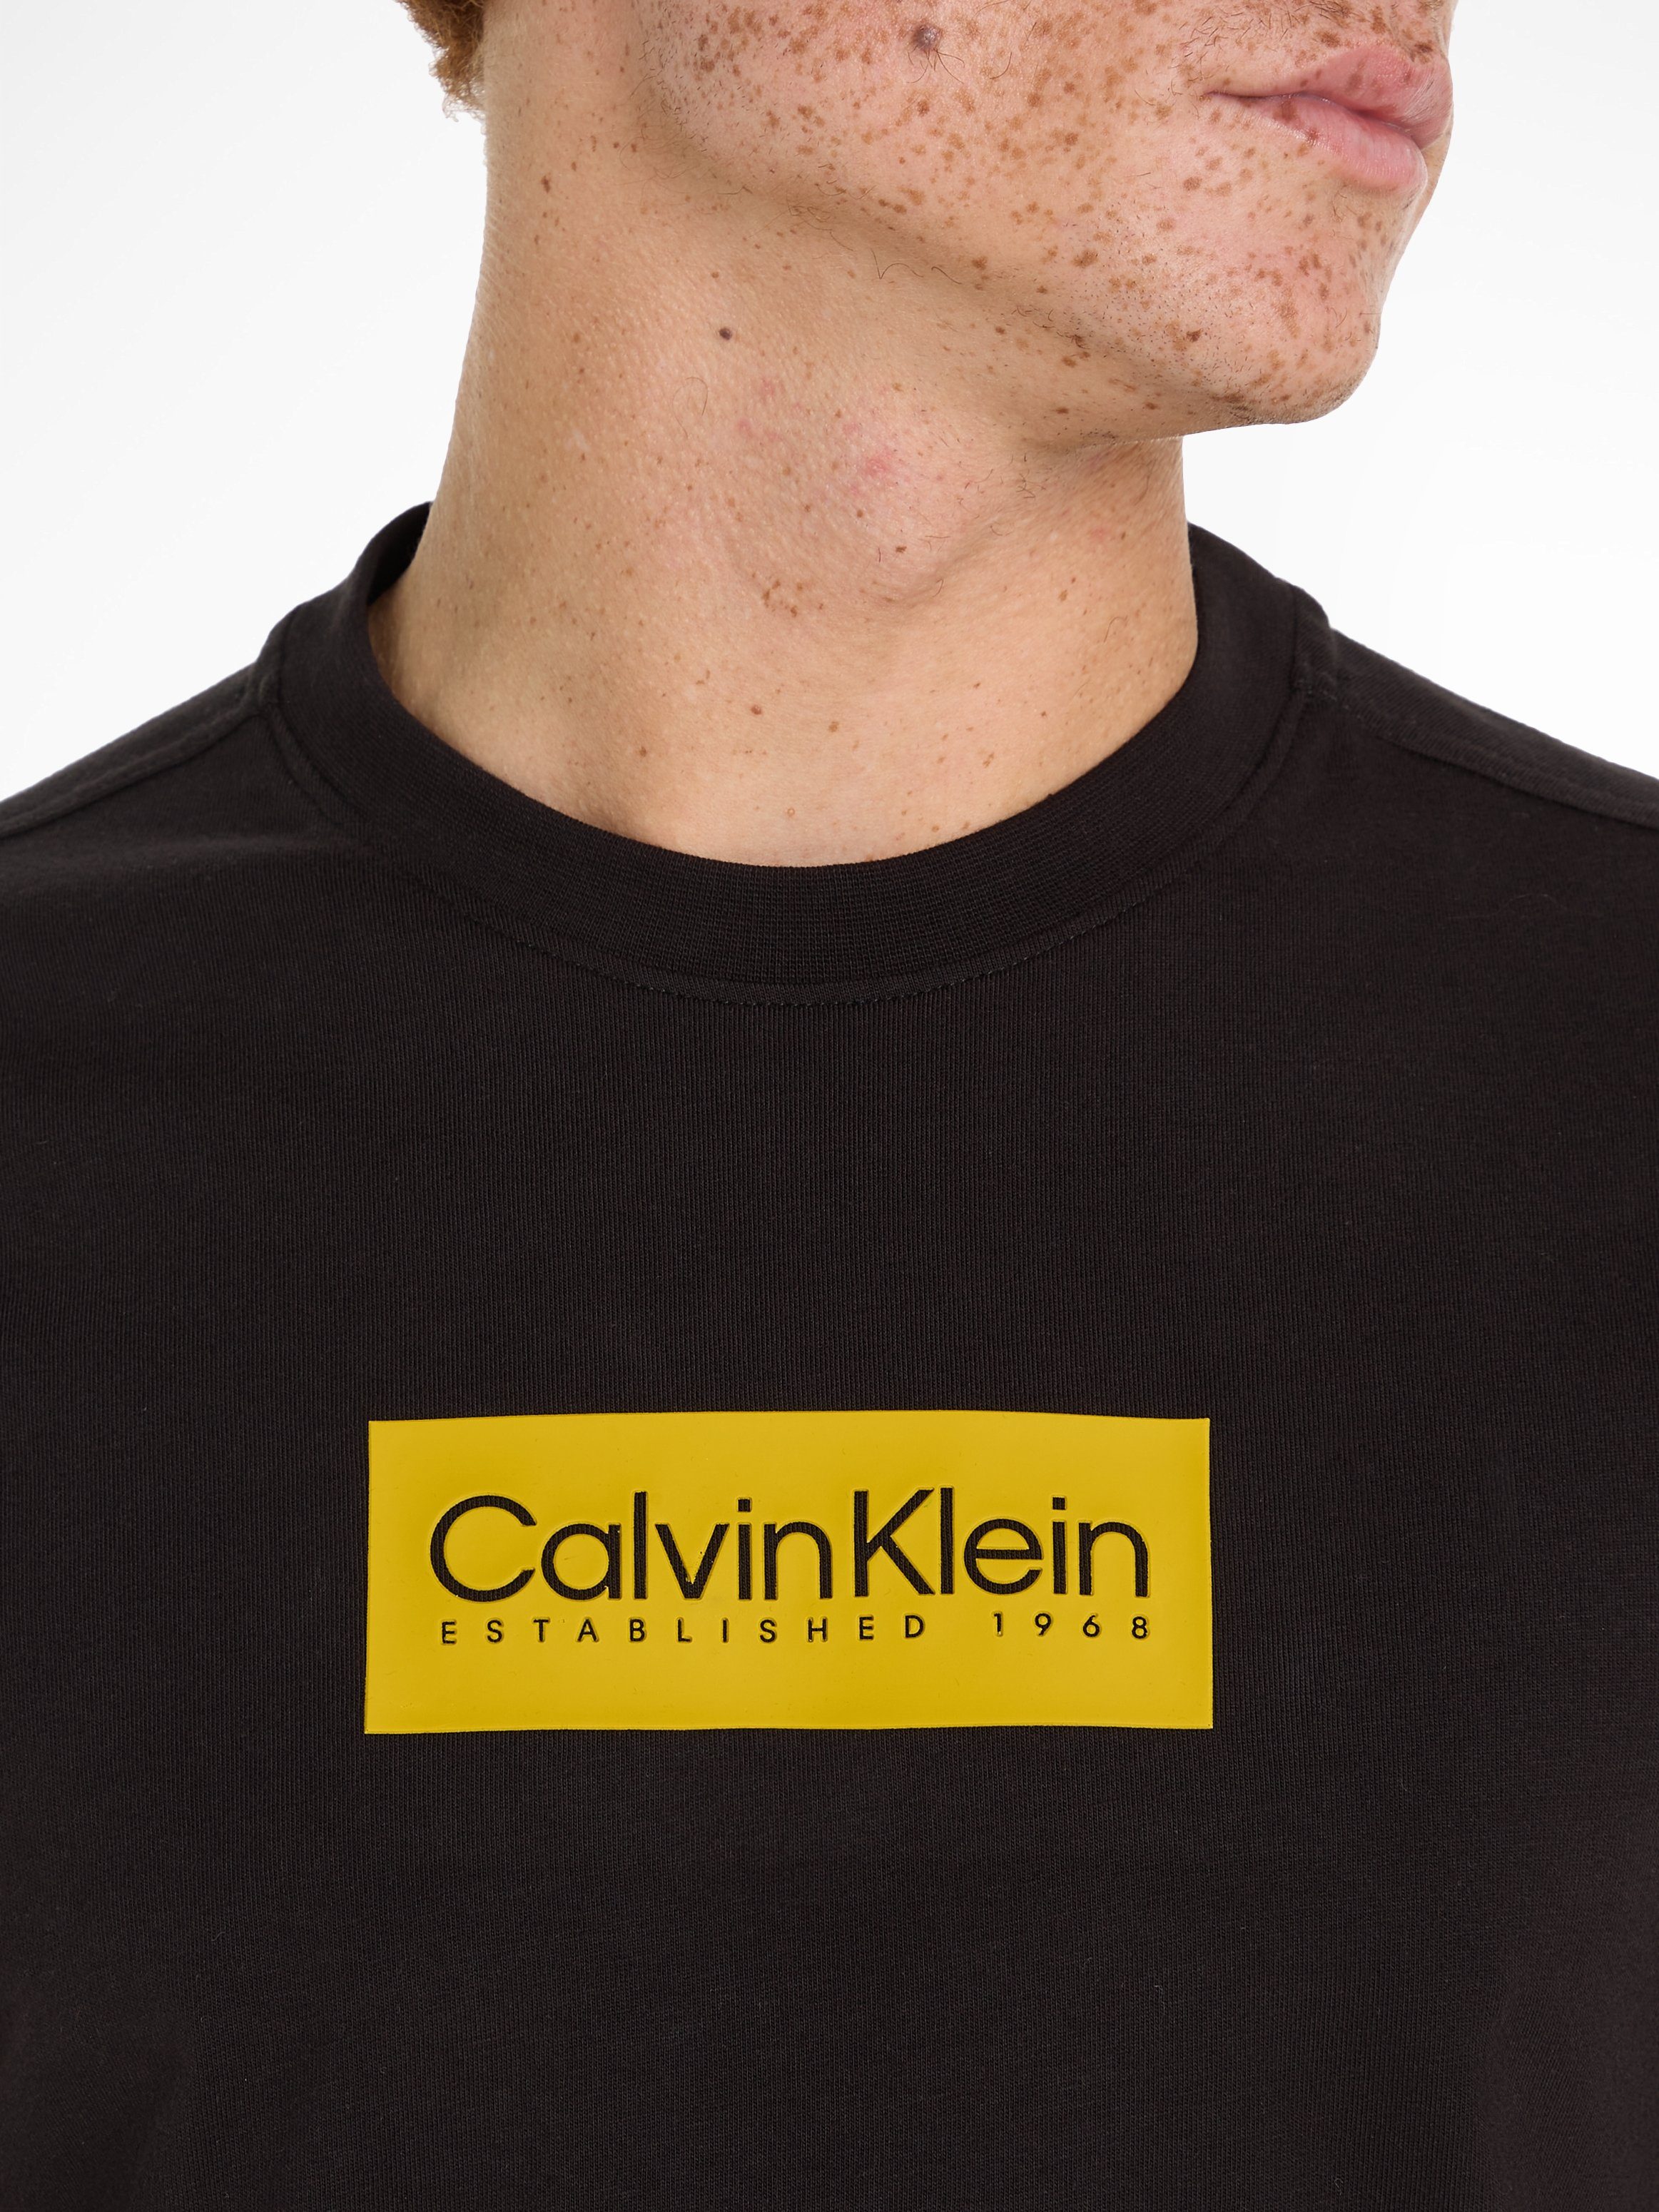 Calvin Klein T-Shirt RAISED T-SHIRT LOGO RUBBER